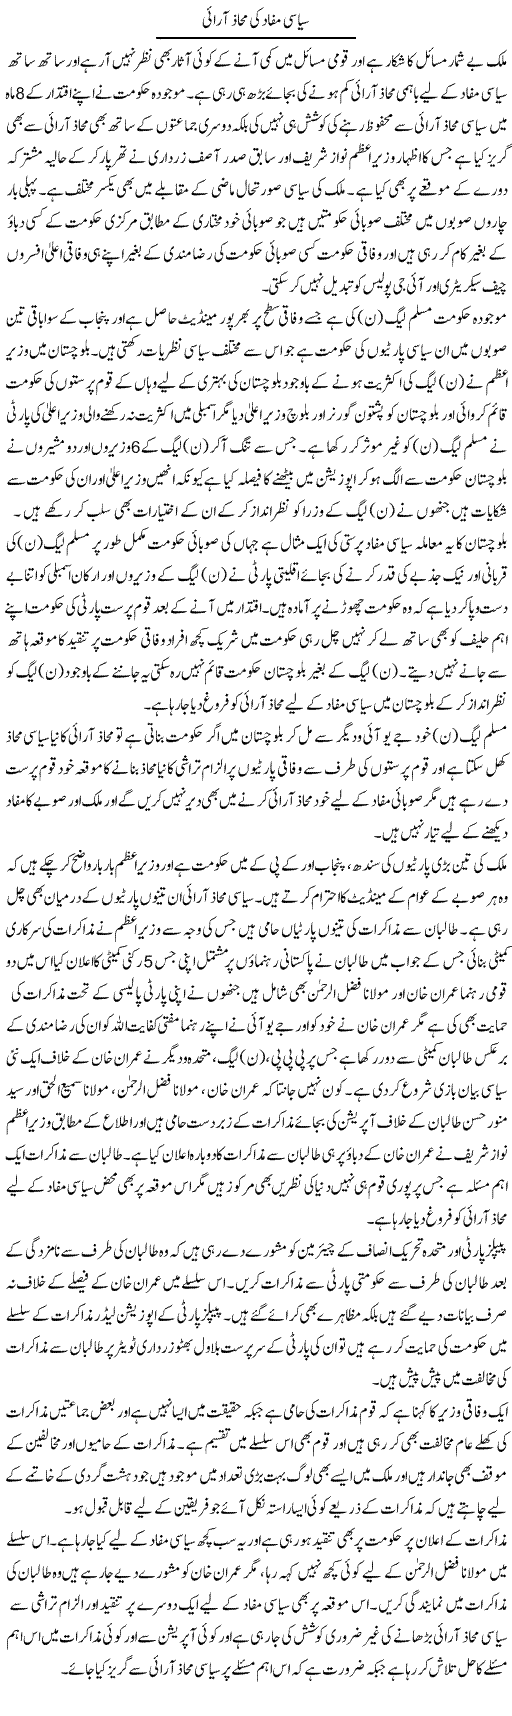 Sias Mafad Ki Mahaz Arai | Muhammad Saeed Araeen | Daily Urdu Columns